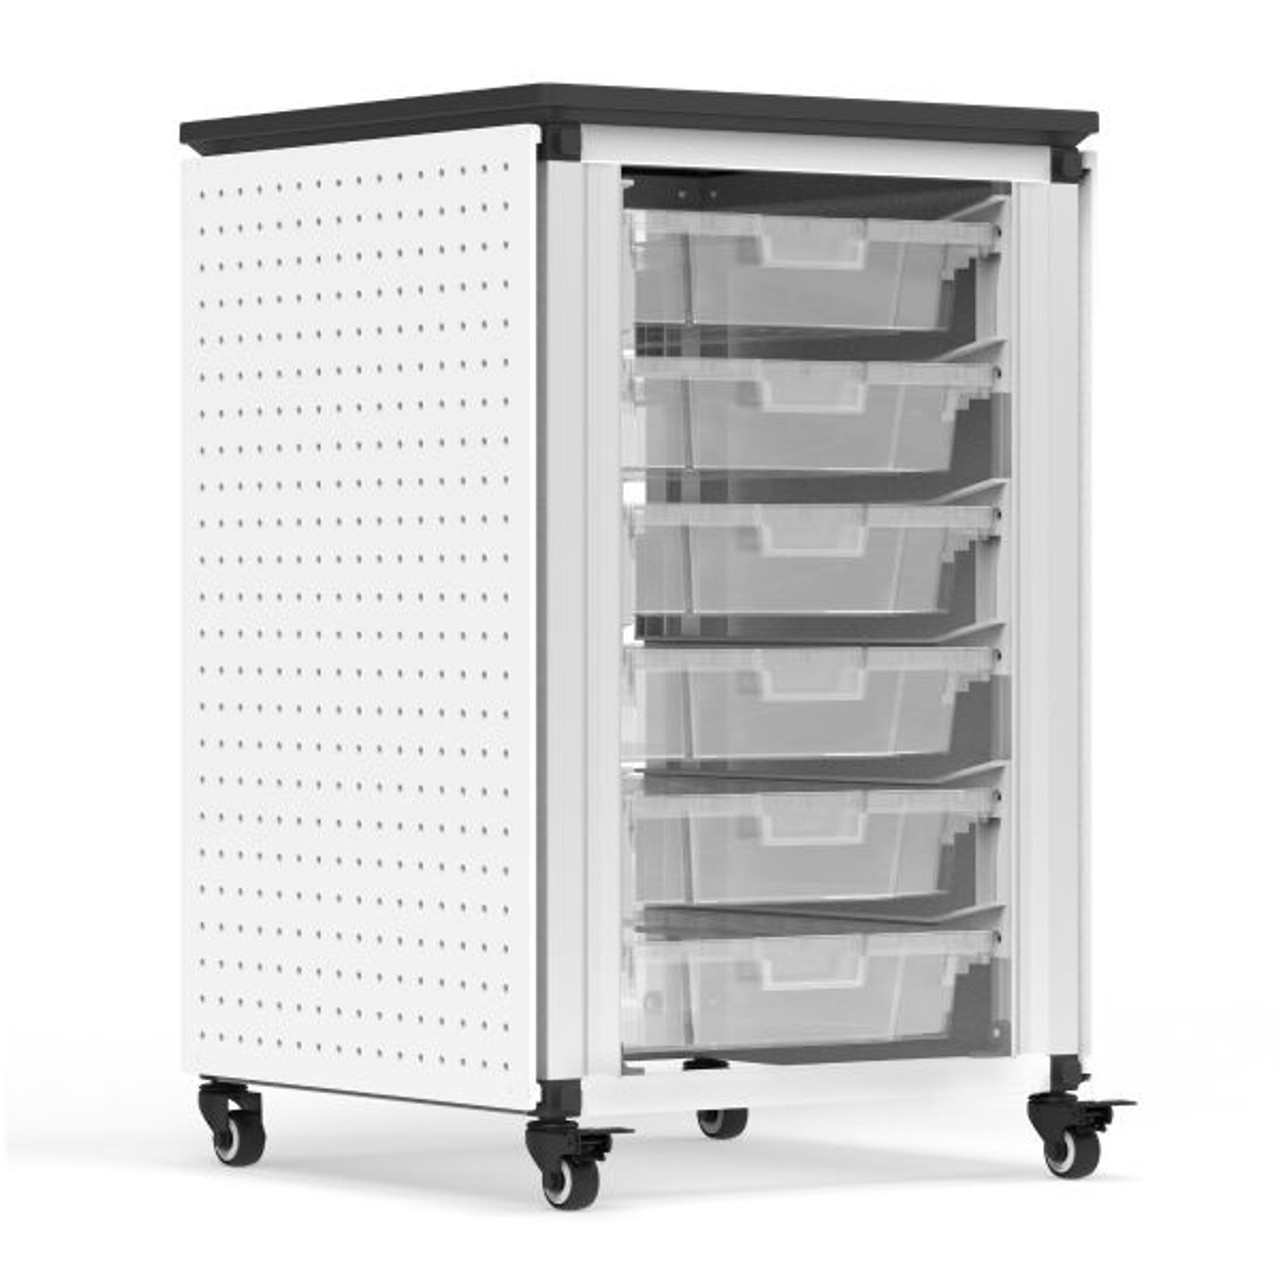 Luxor MBS-STR-11-6S Modular Classroom Storage Cabinet - Single Module with 6 Small Bins